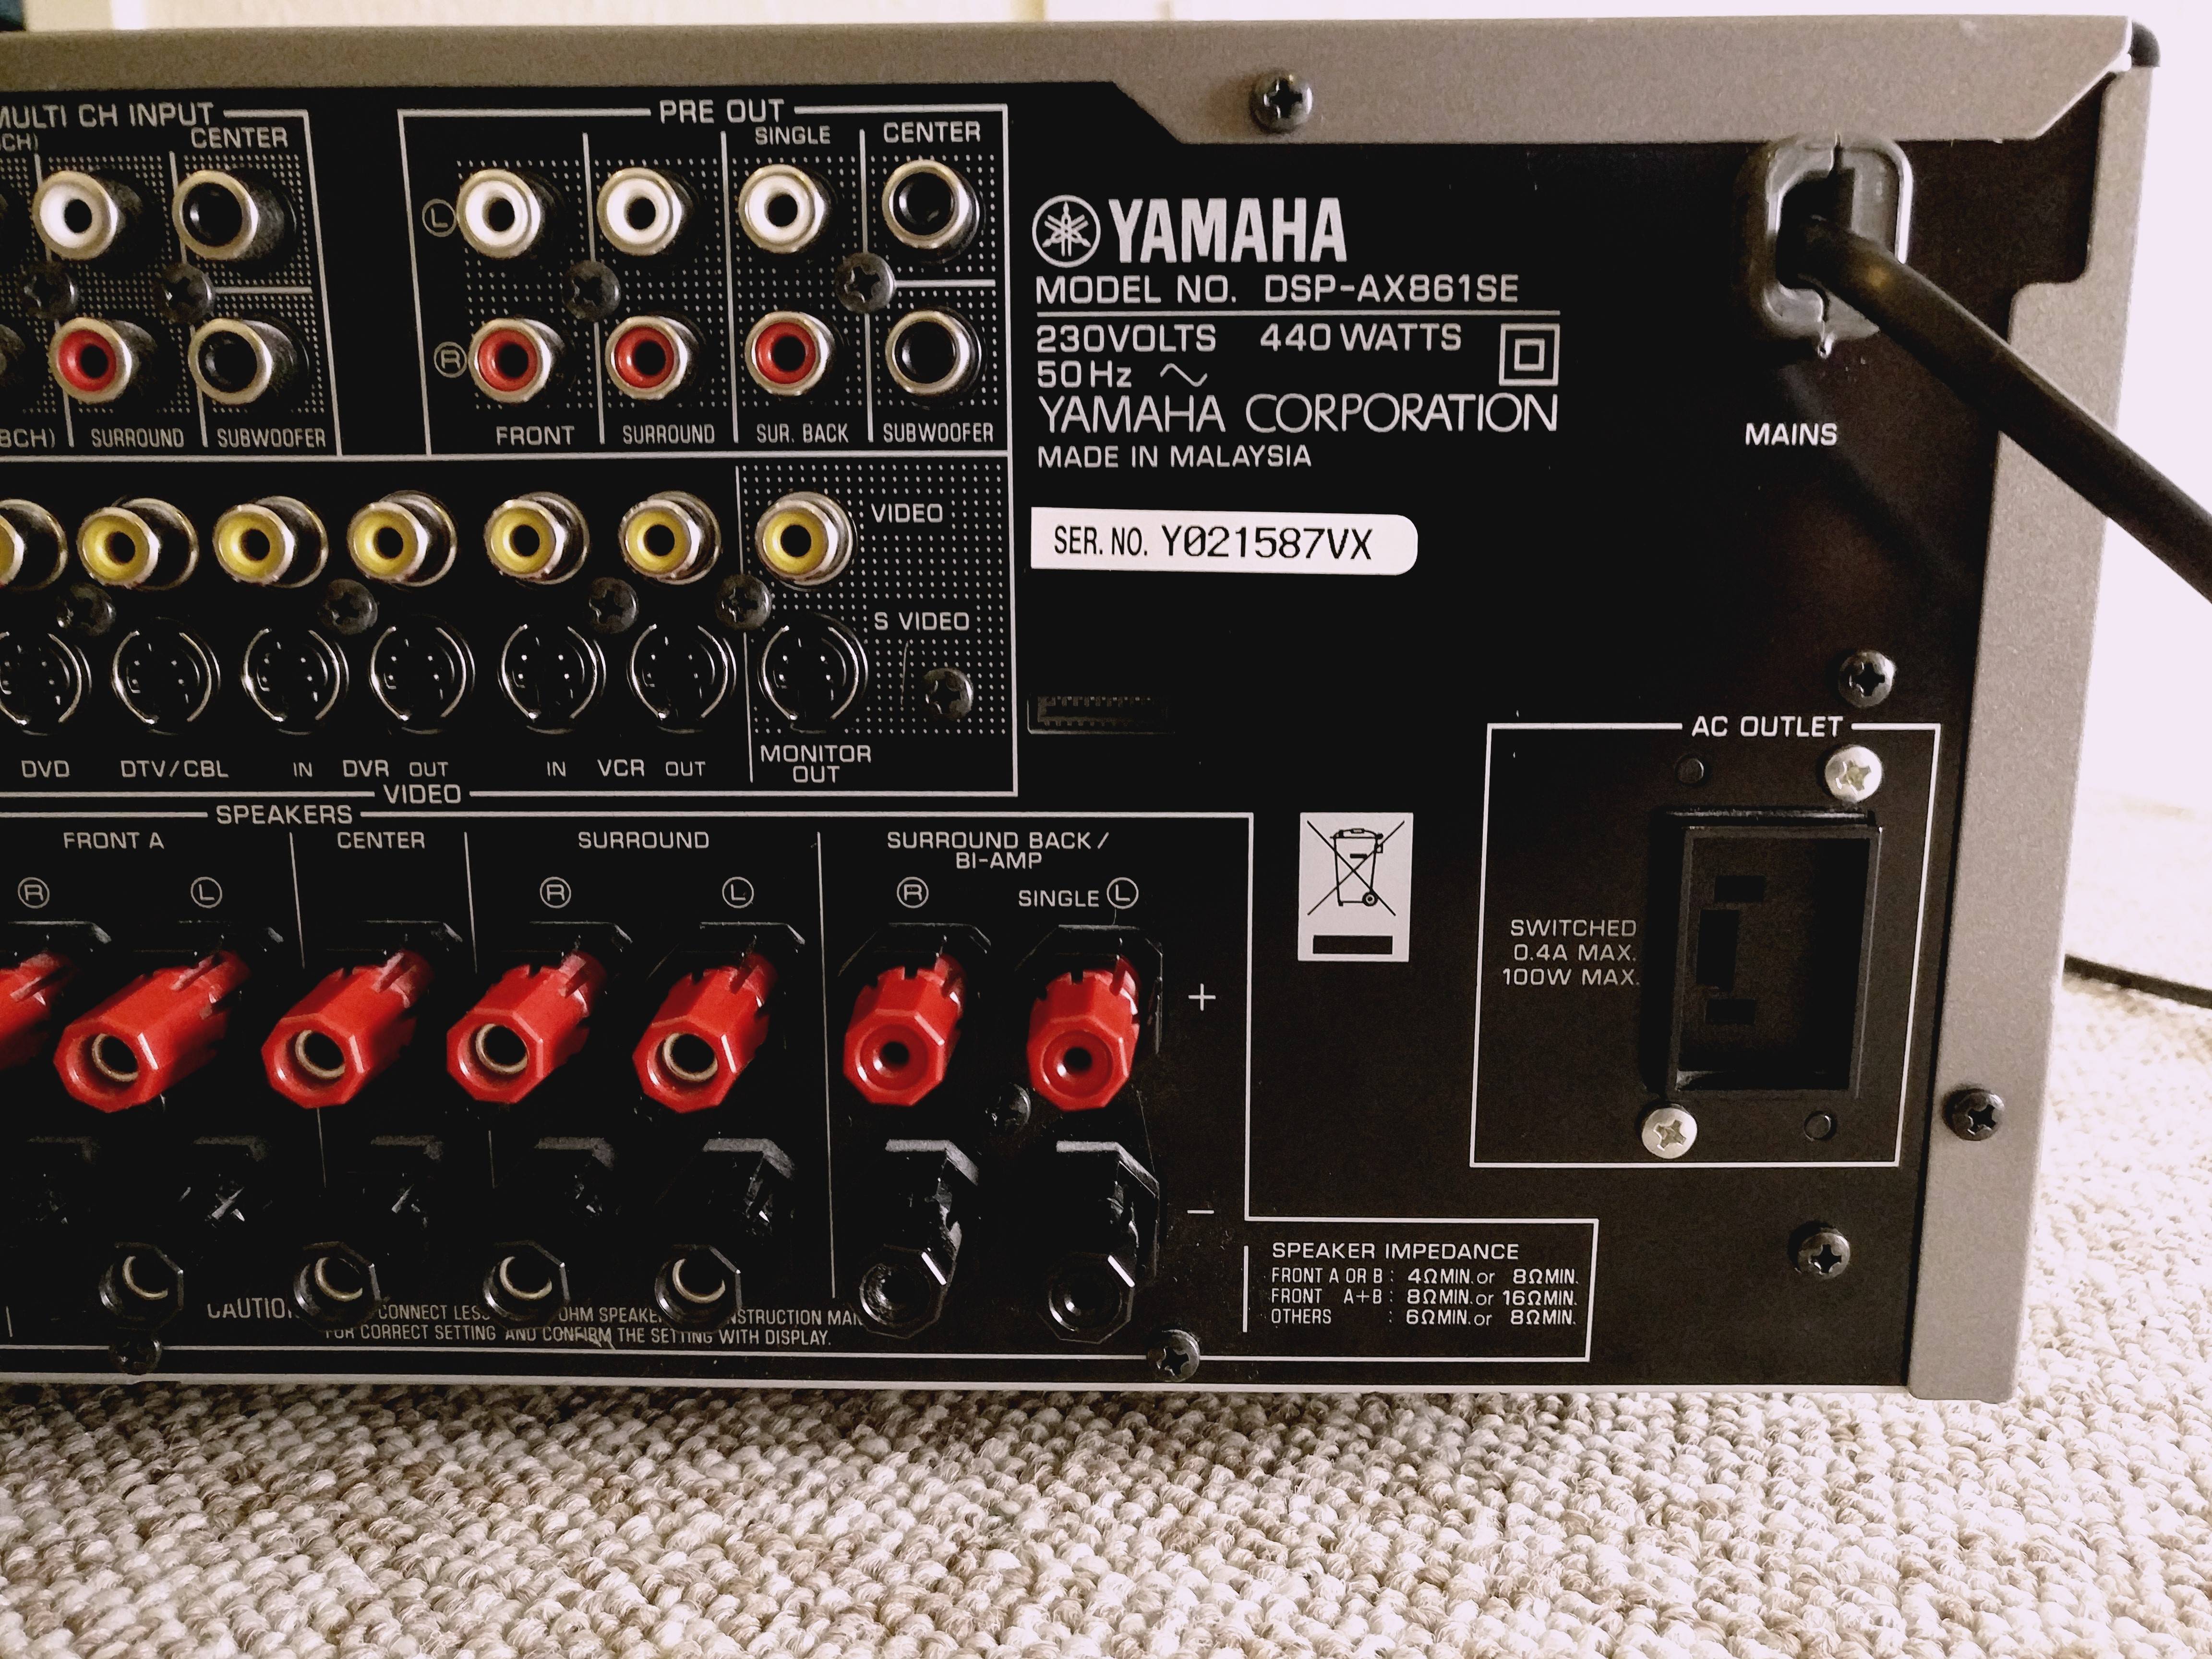 Yamaha DSP-AX761